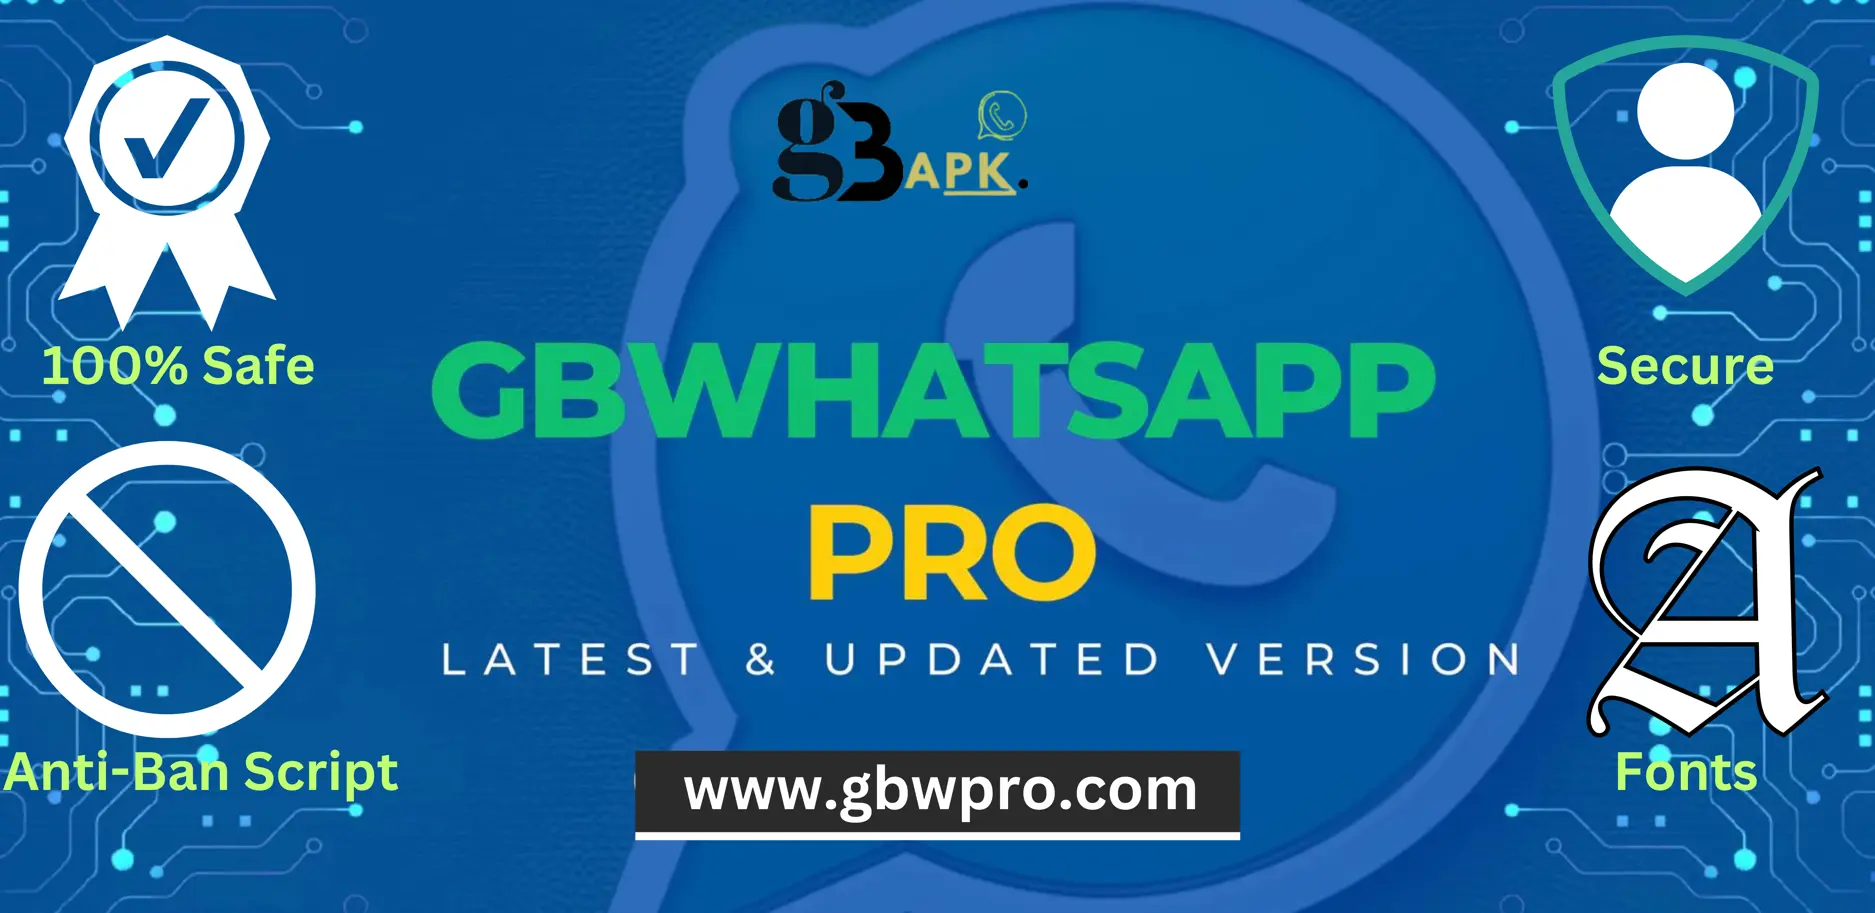 gbwhatsapp-pro-banner3